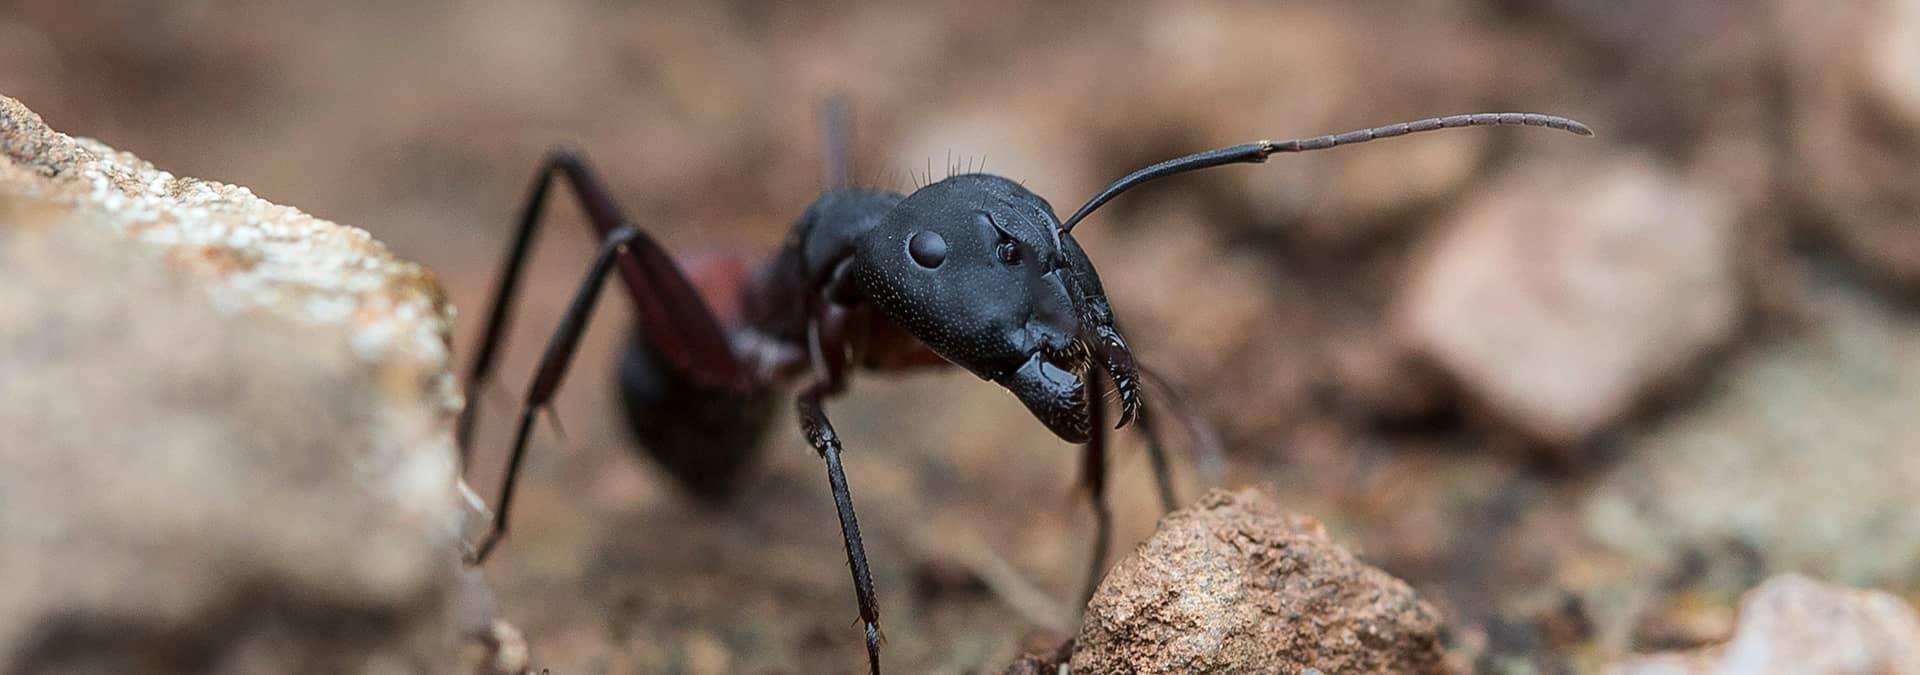 Carpenter Ant Identification A Guide To Carpenter Ants In Ne Florida